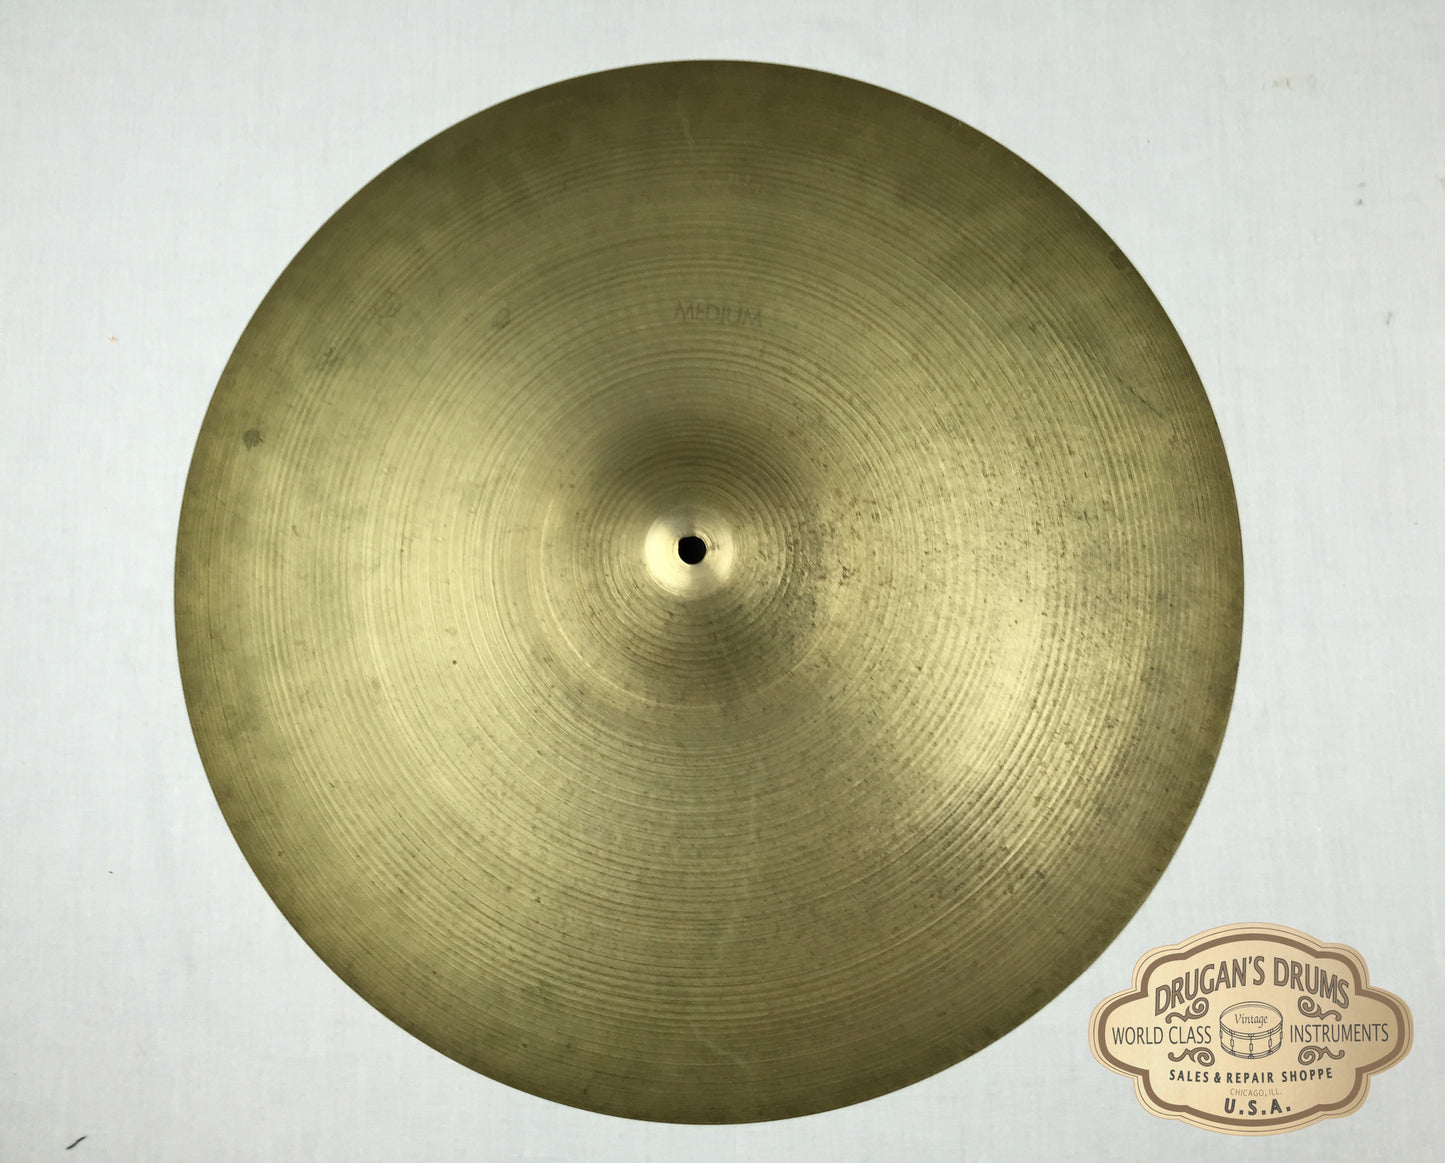 20" Zildjian A 1960's "Medium" Ride Cymbal 2090g #159